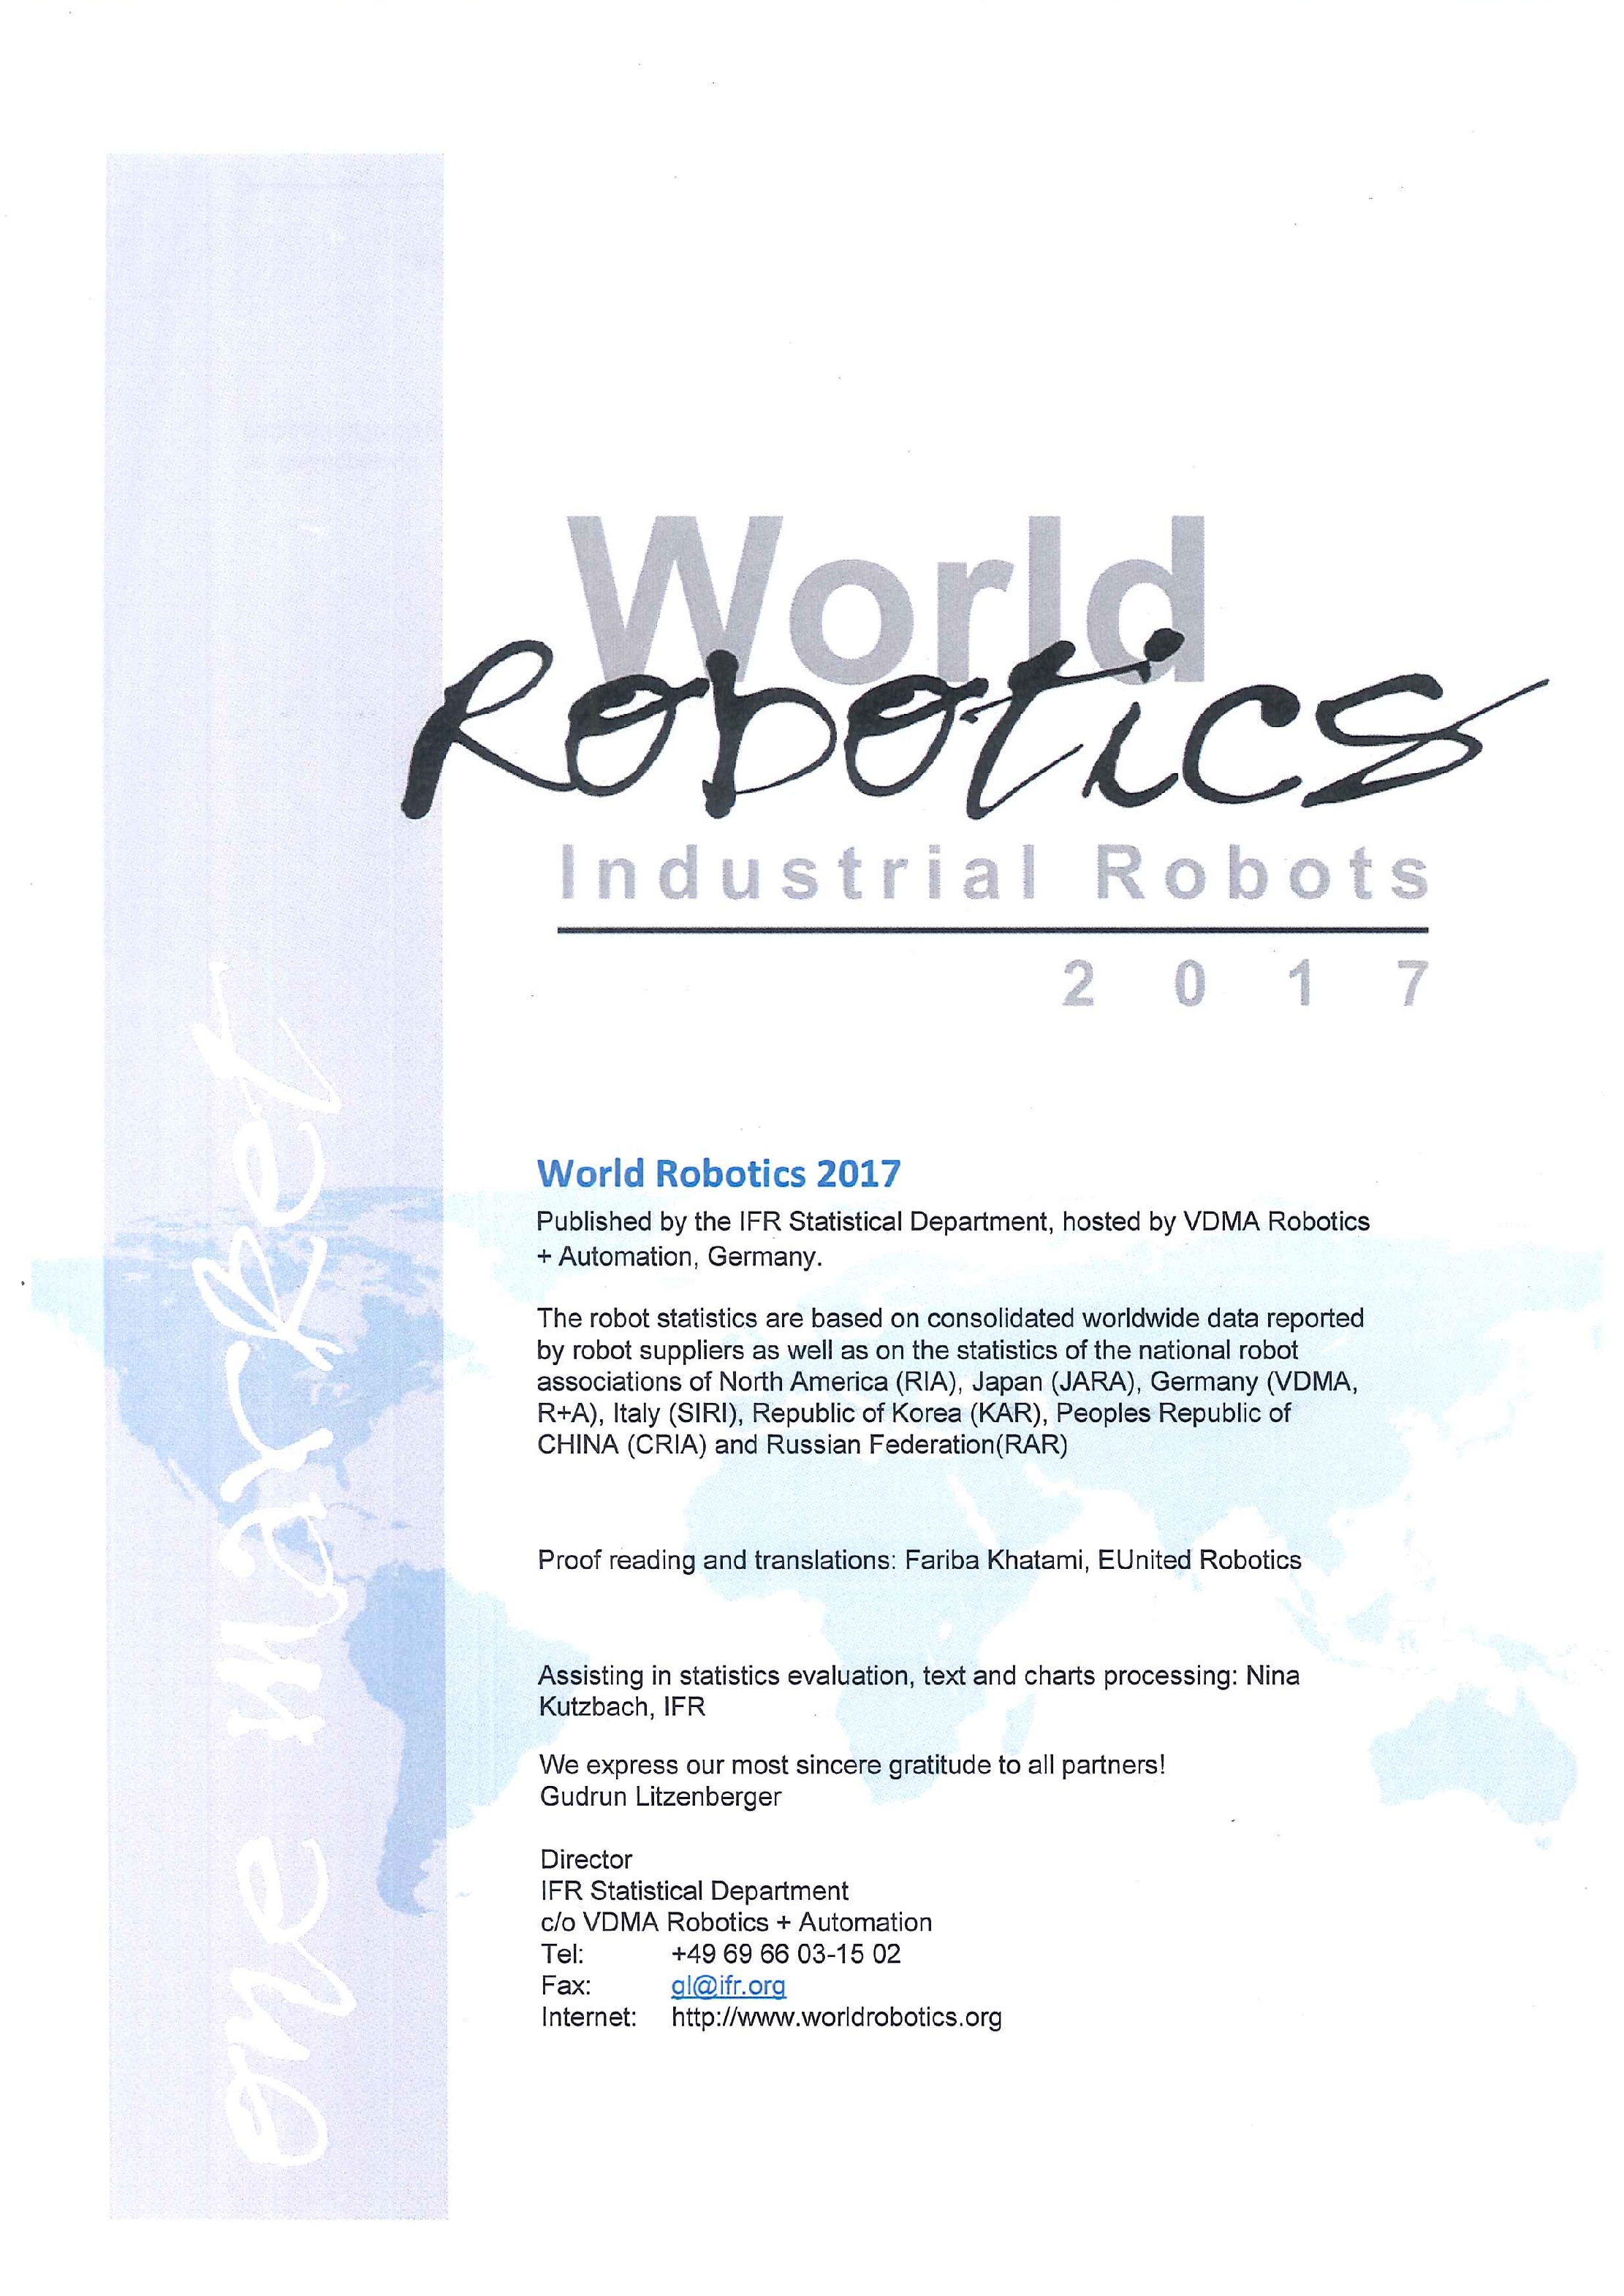 World robotics [e-book].industrial robots.2017